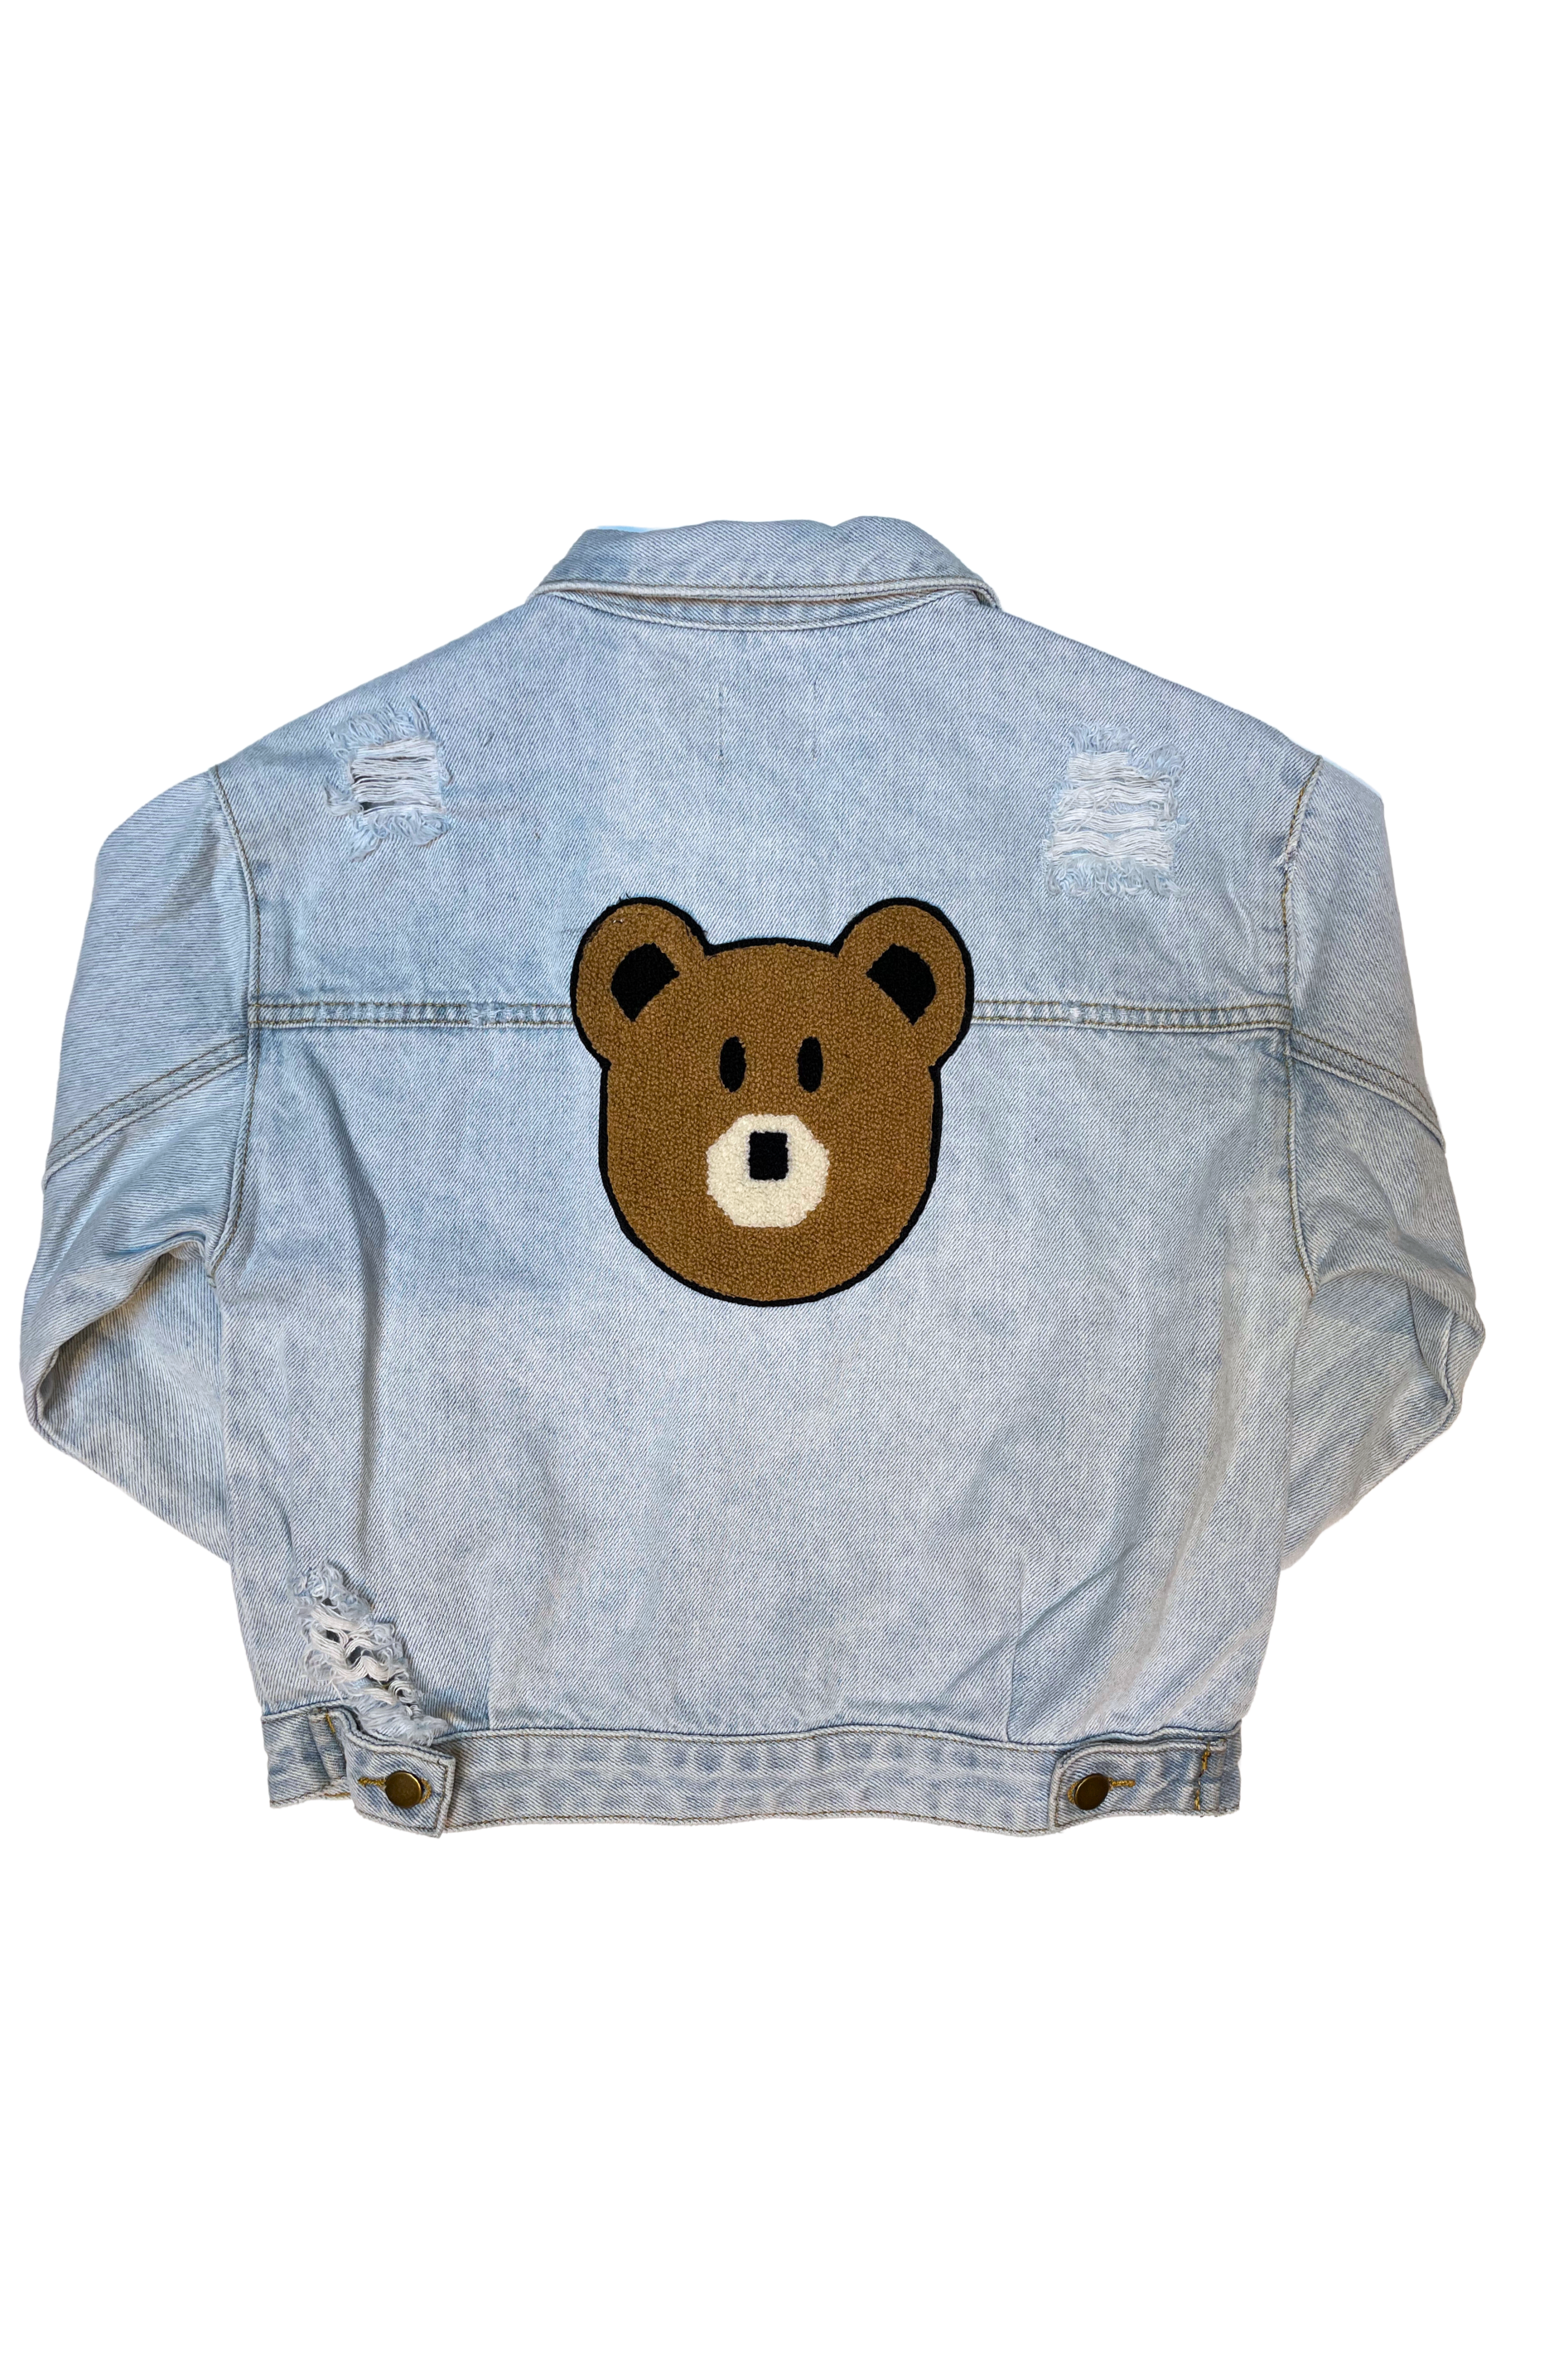 Levi White Denim Jacket with Teddy Bear Fleece Lining | eBay